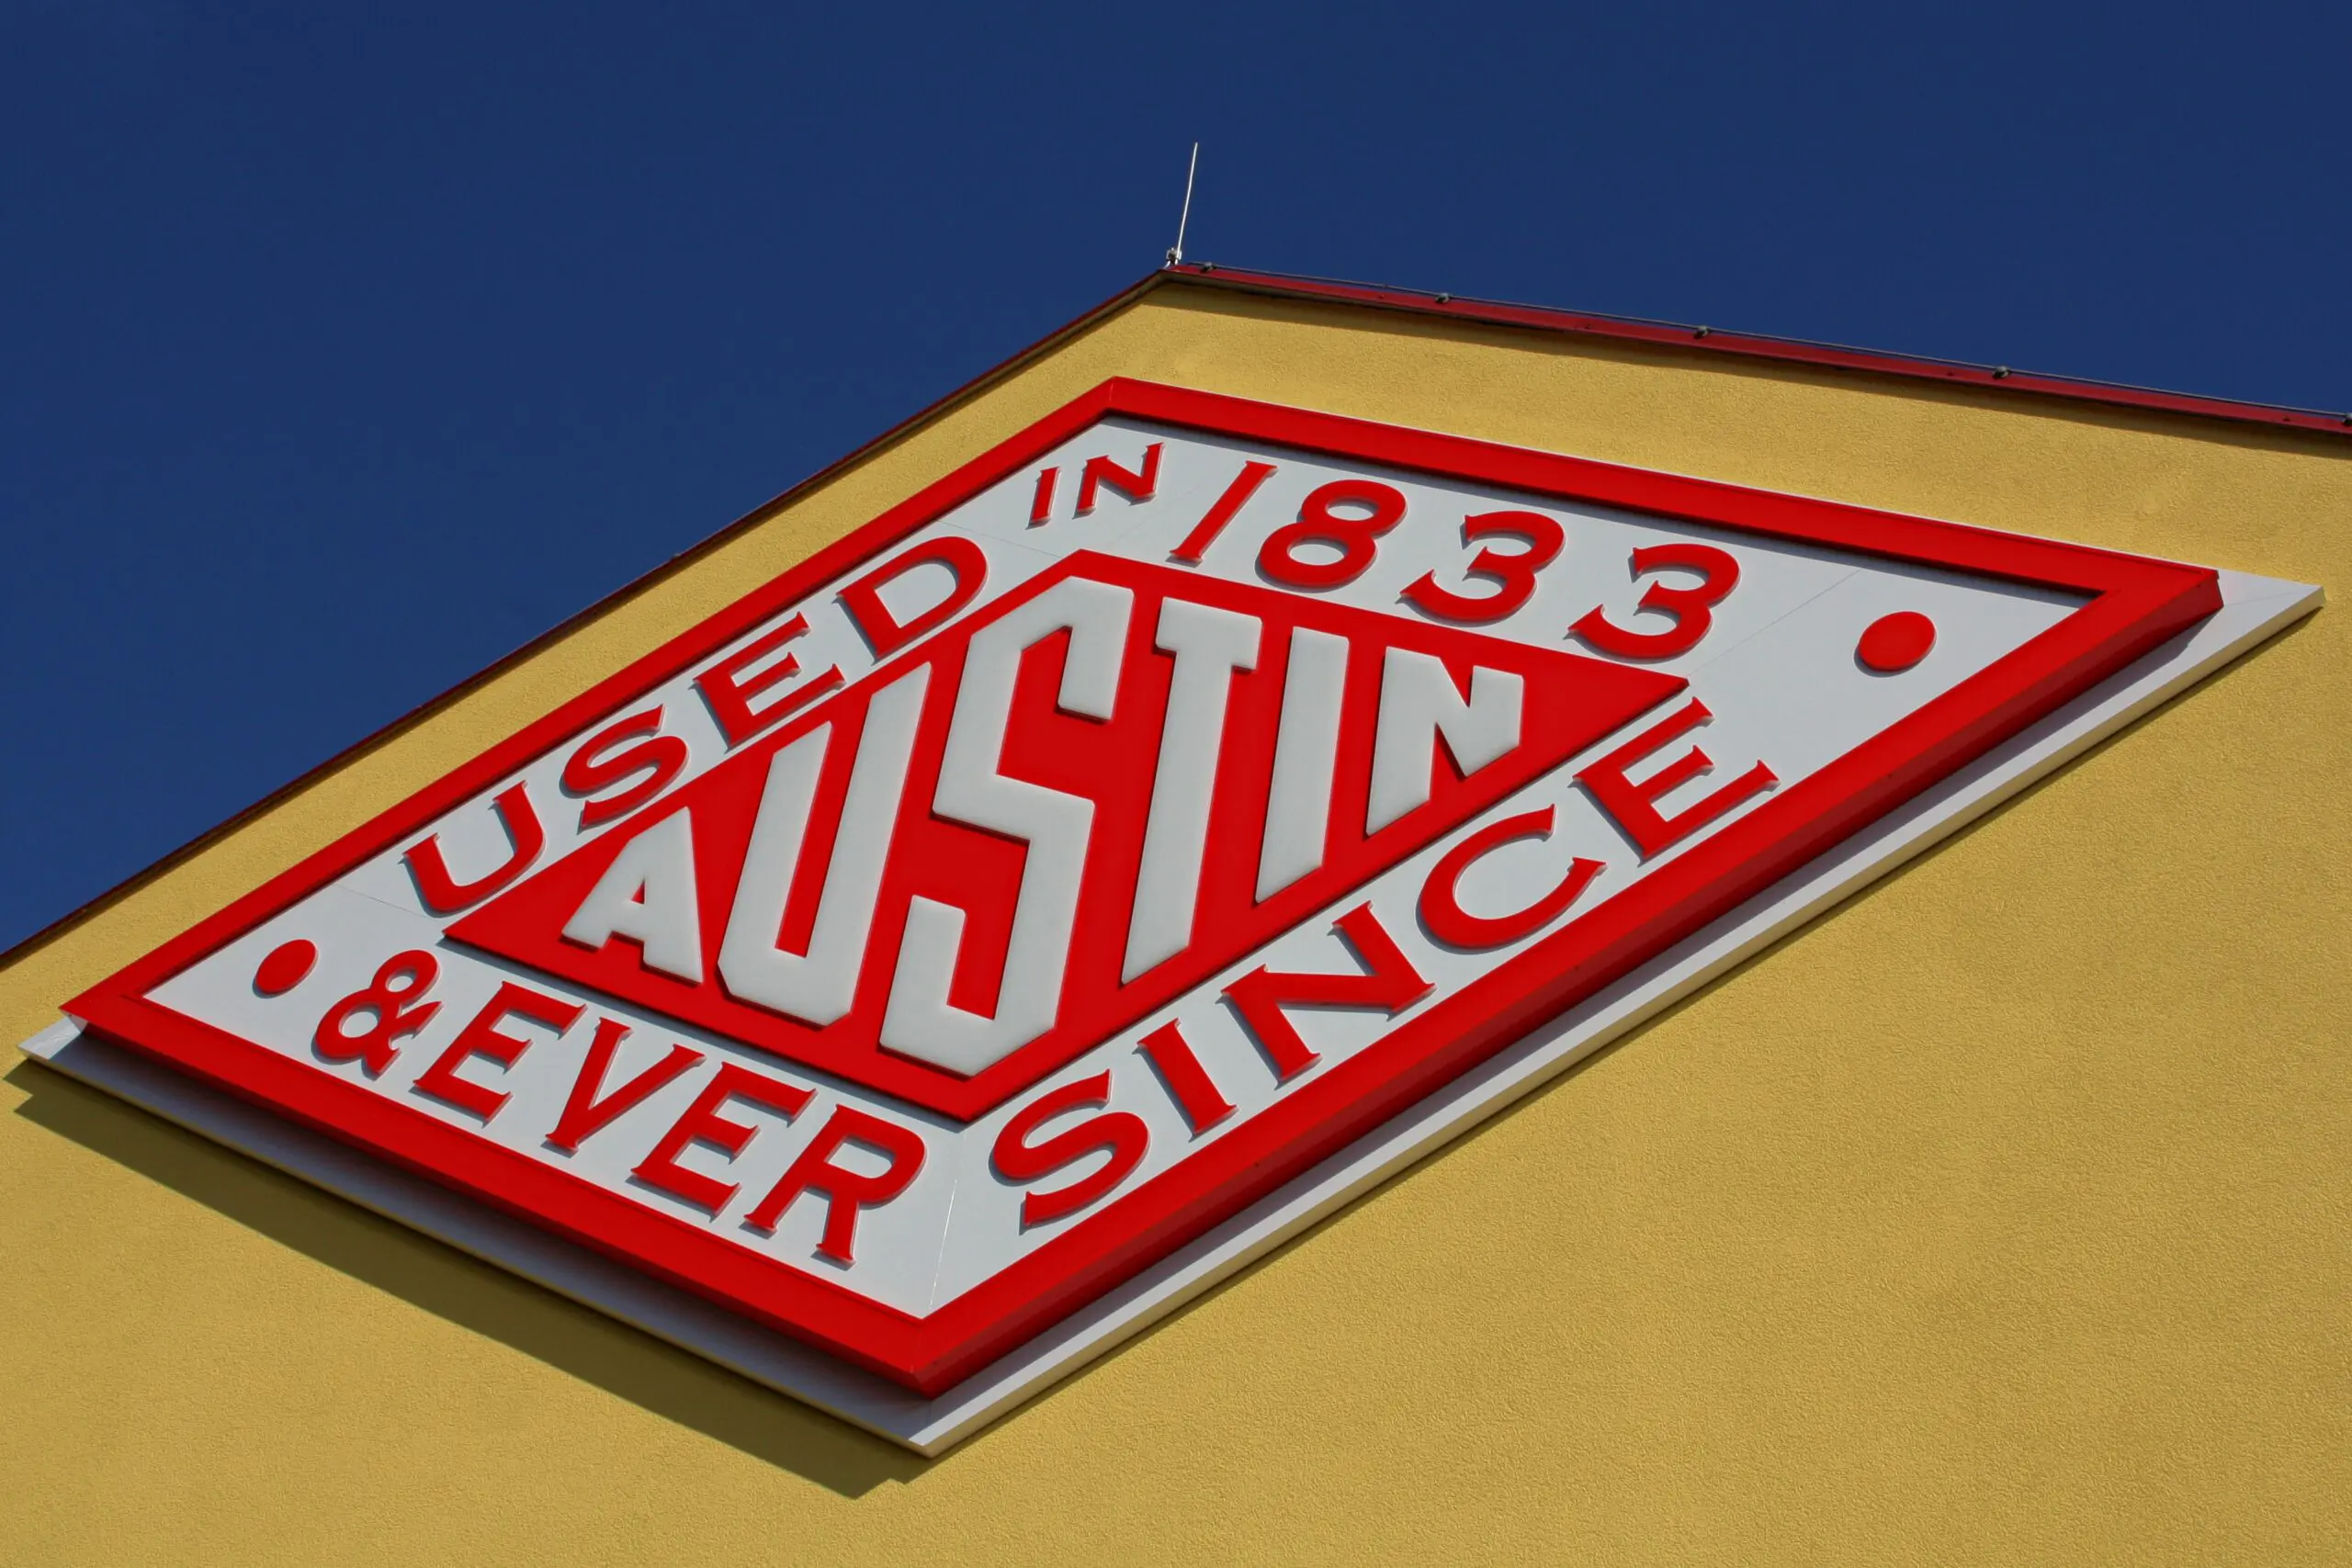 Austin Powder logo on side of building